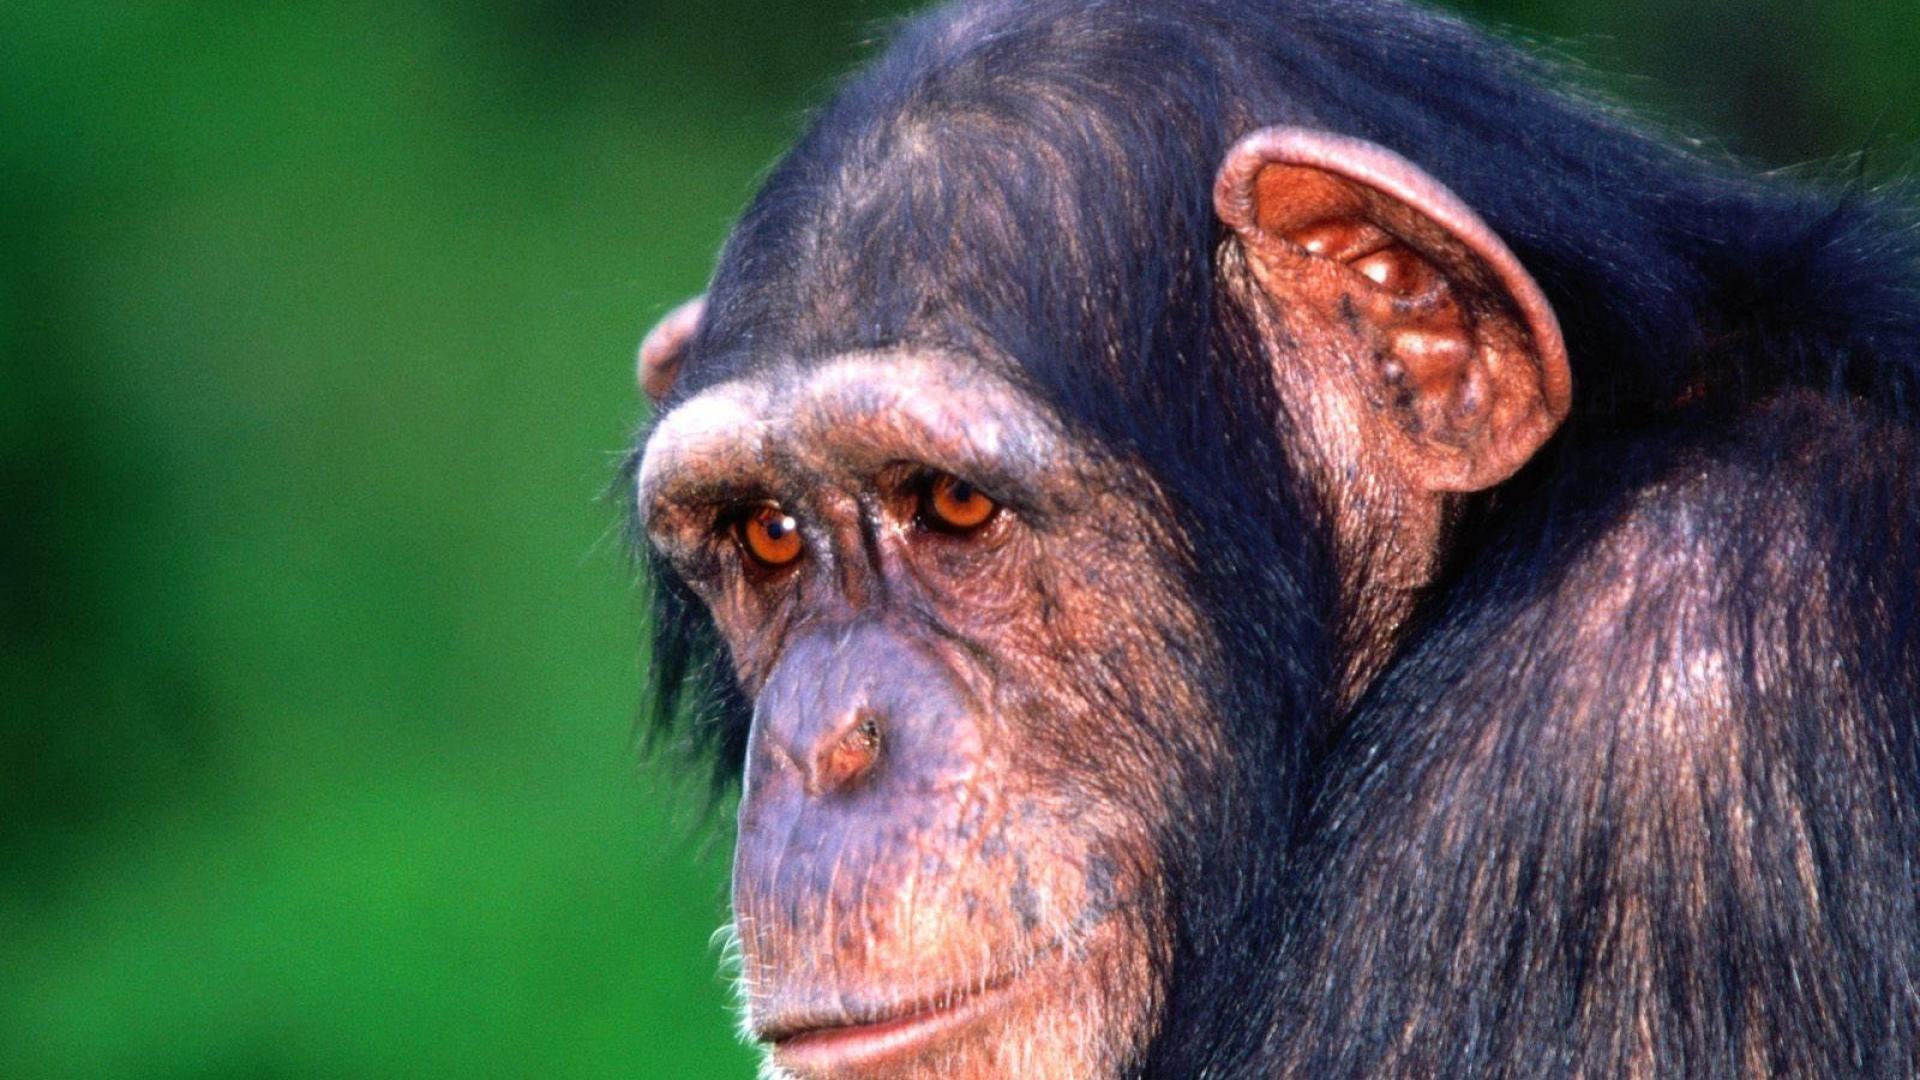 Sad monkey chimpanzee wallpaper and image, picture